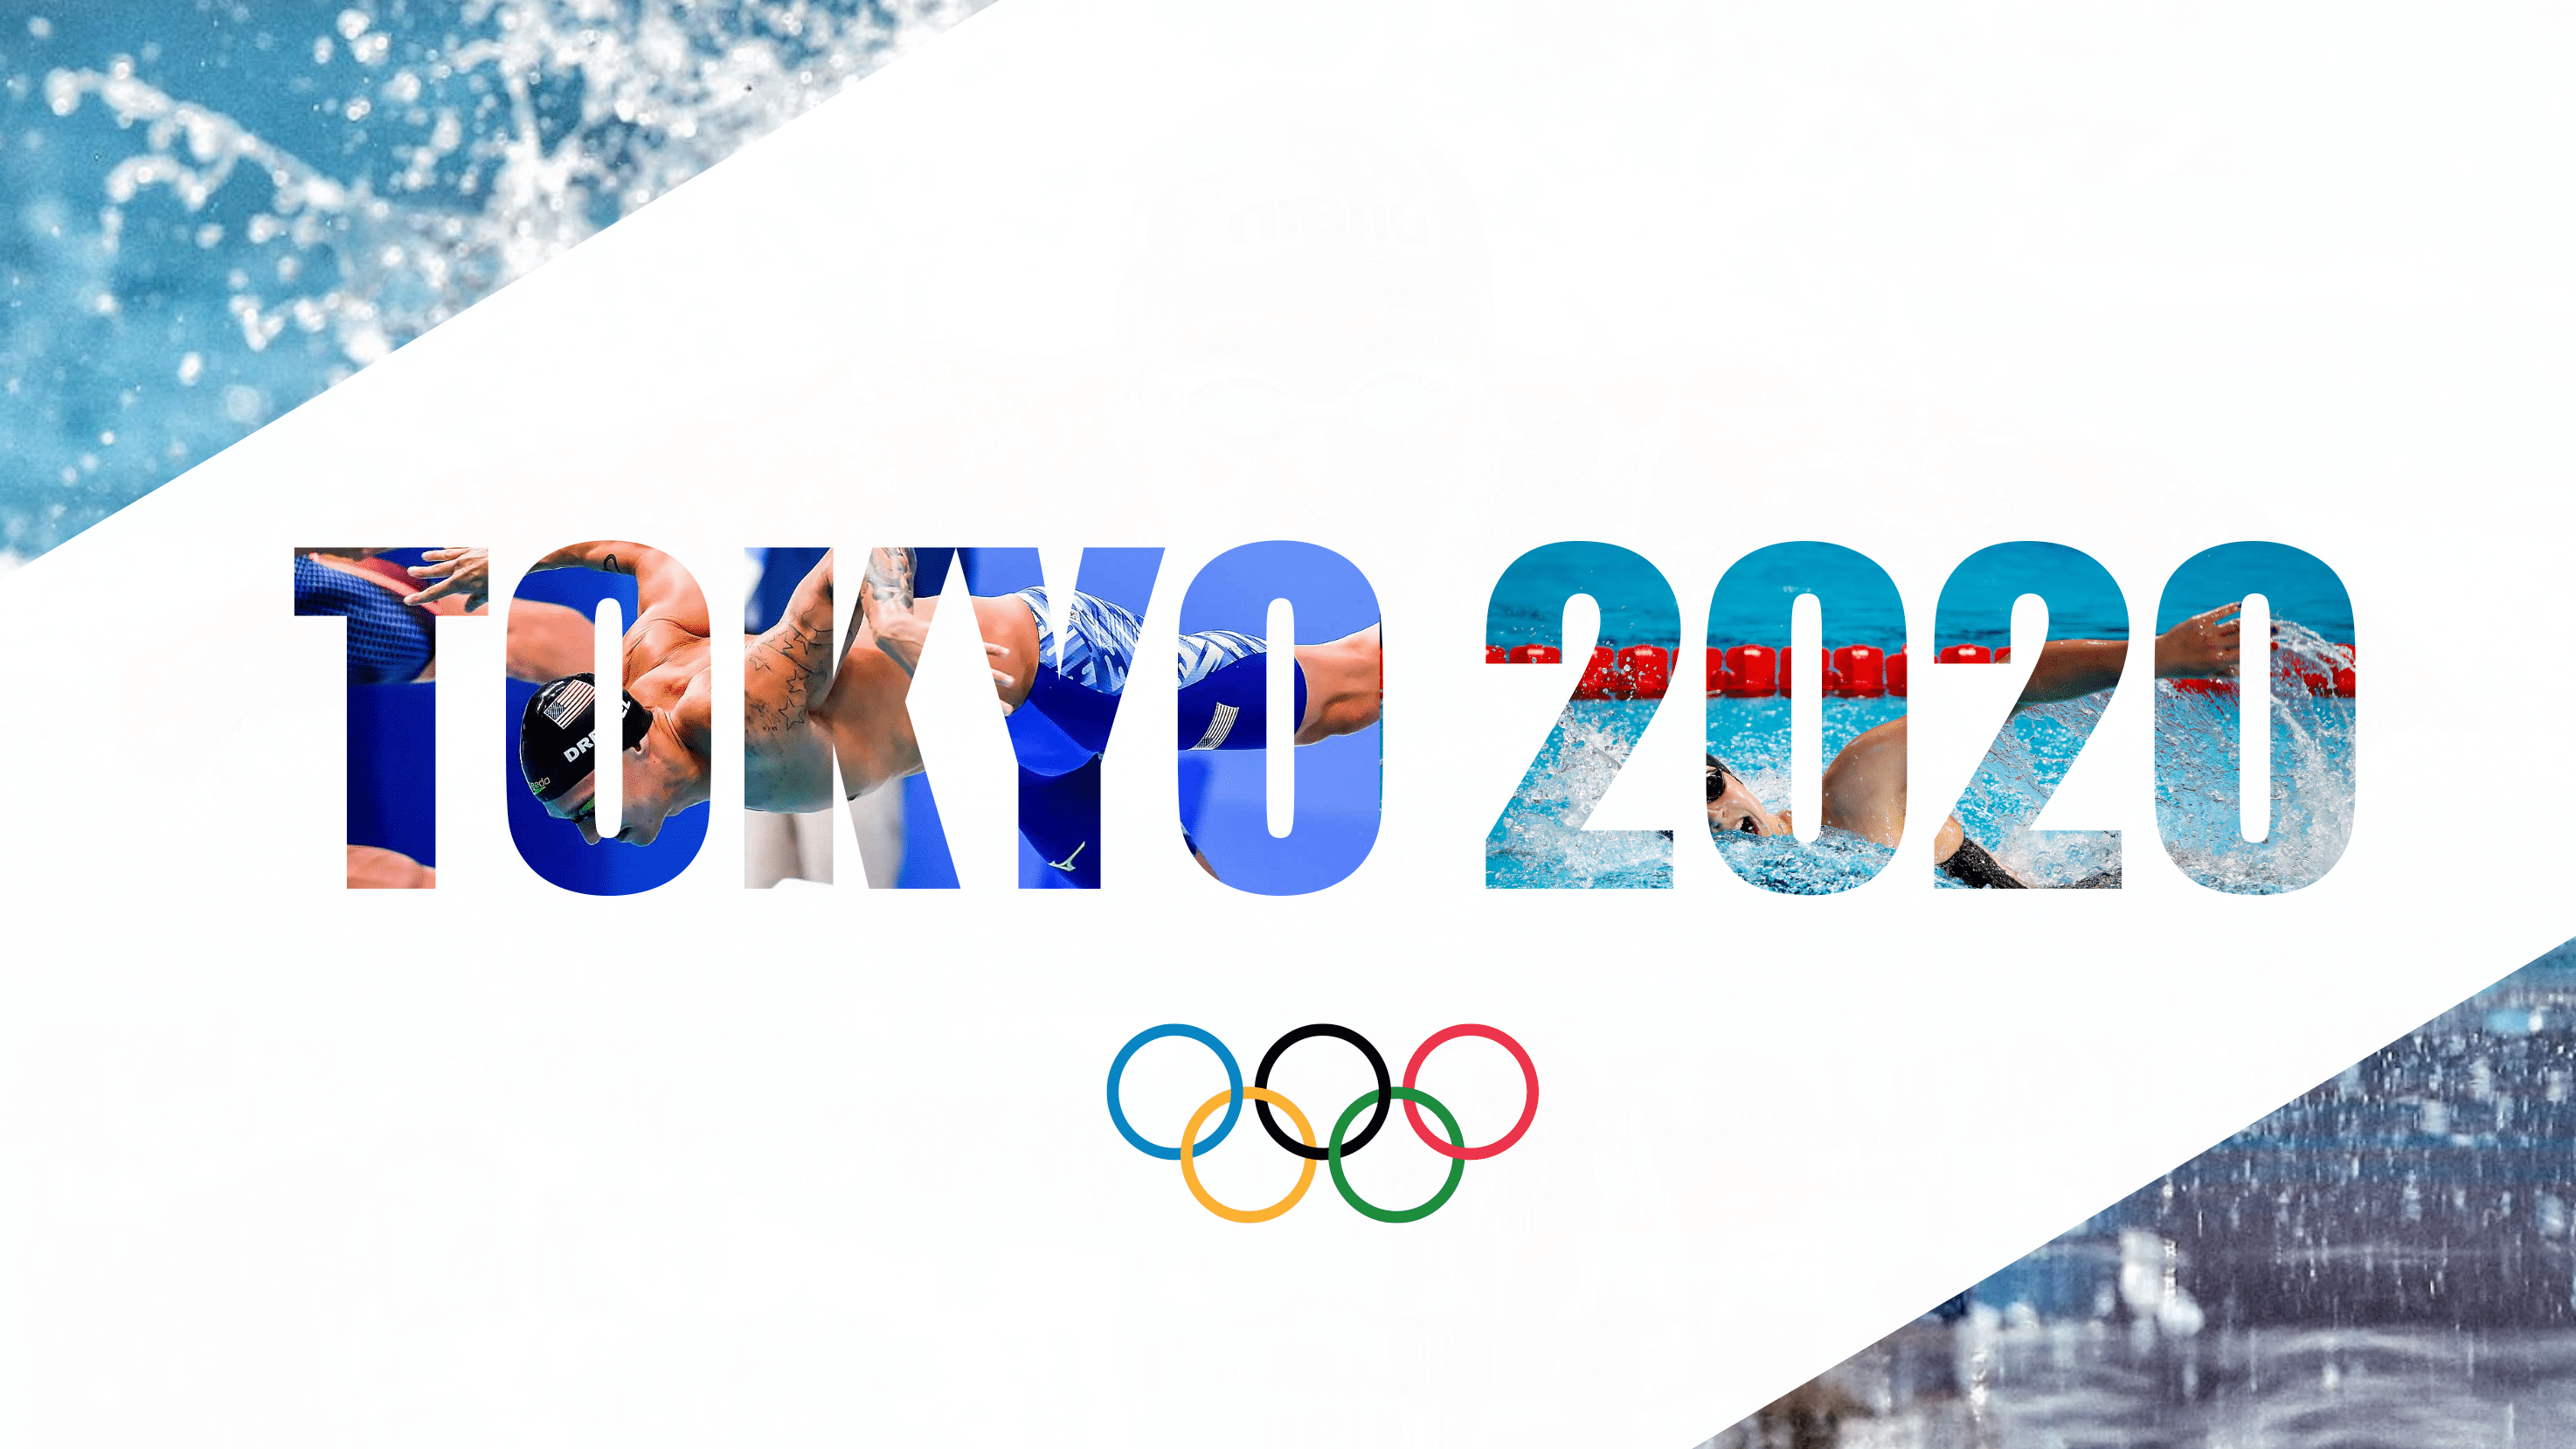 Olympic tokyo 2021